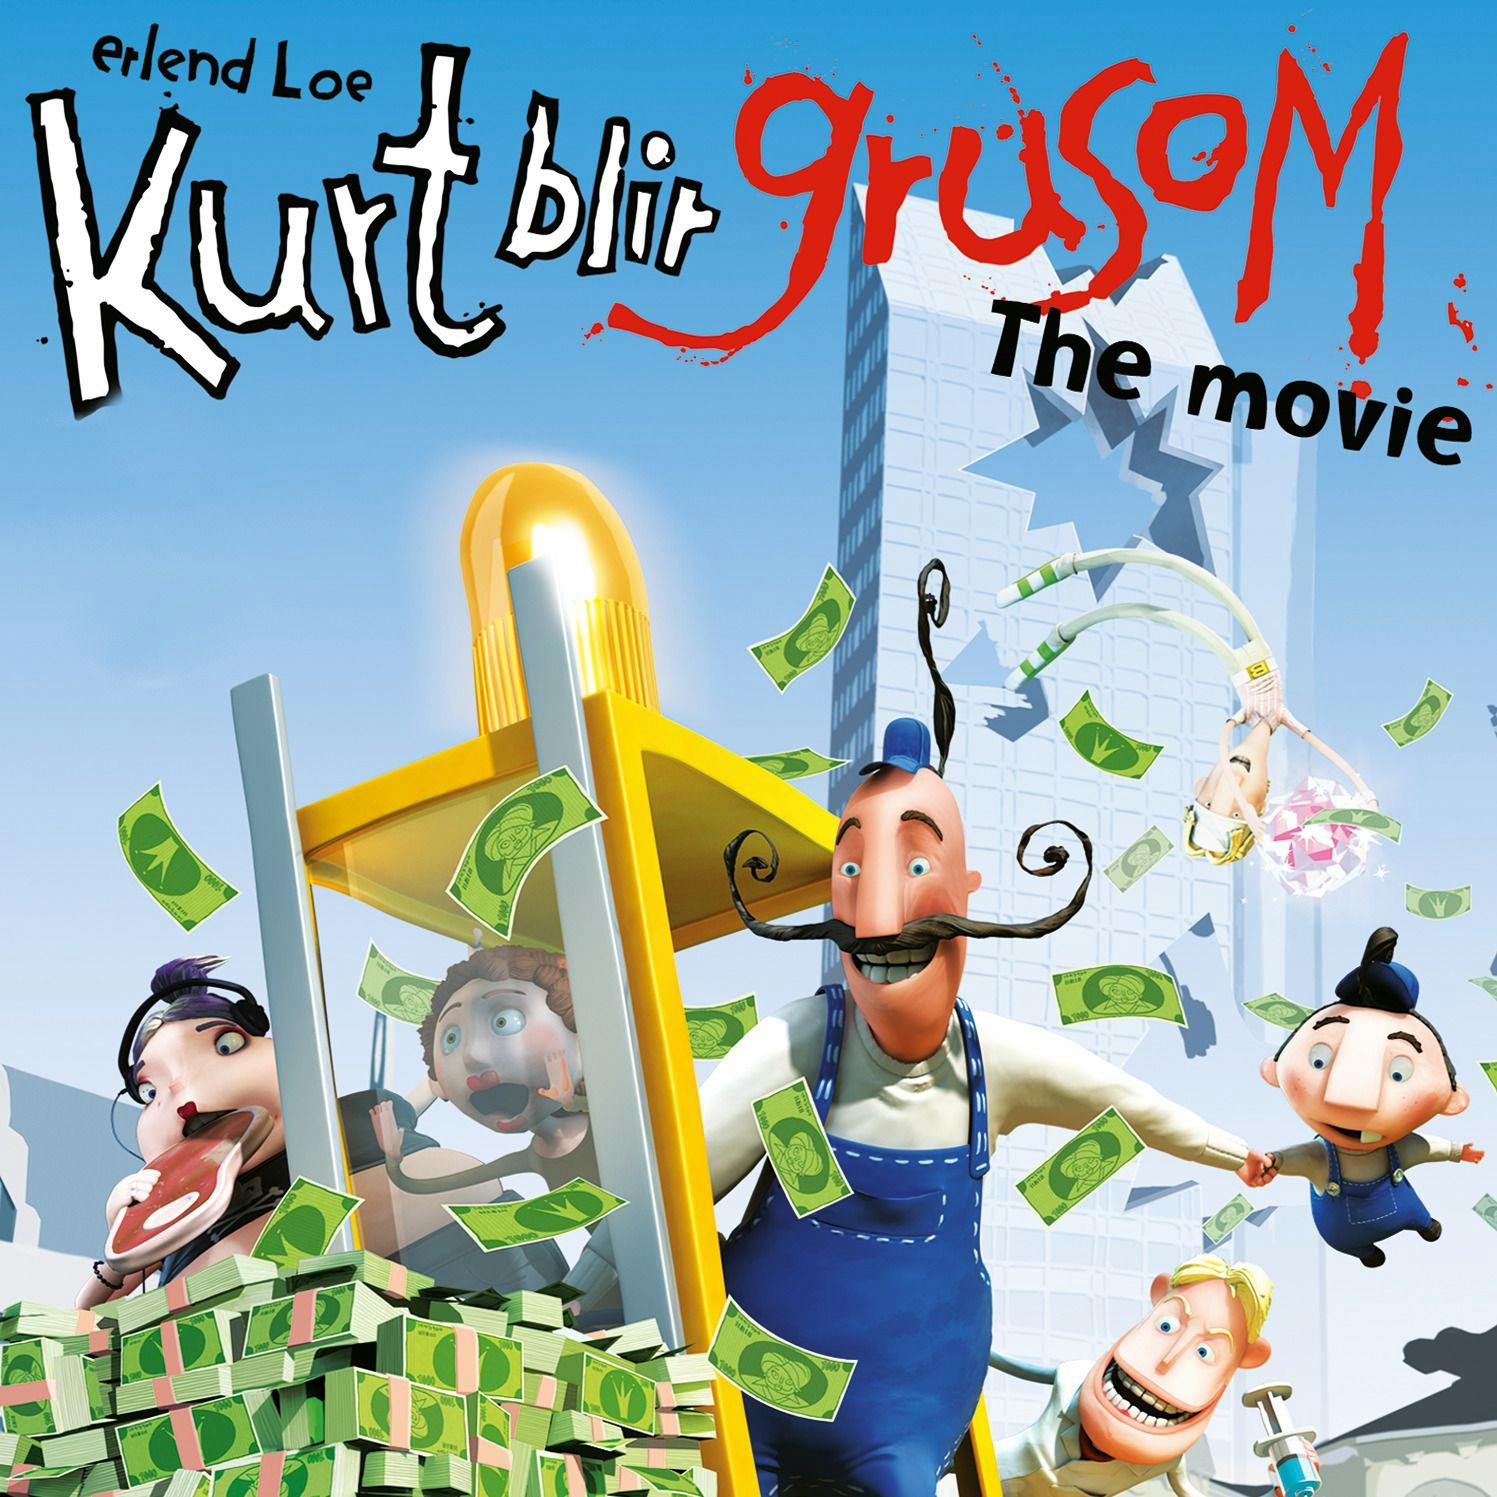 Kurt blir grusom - the movie - undefined